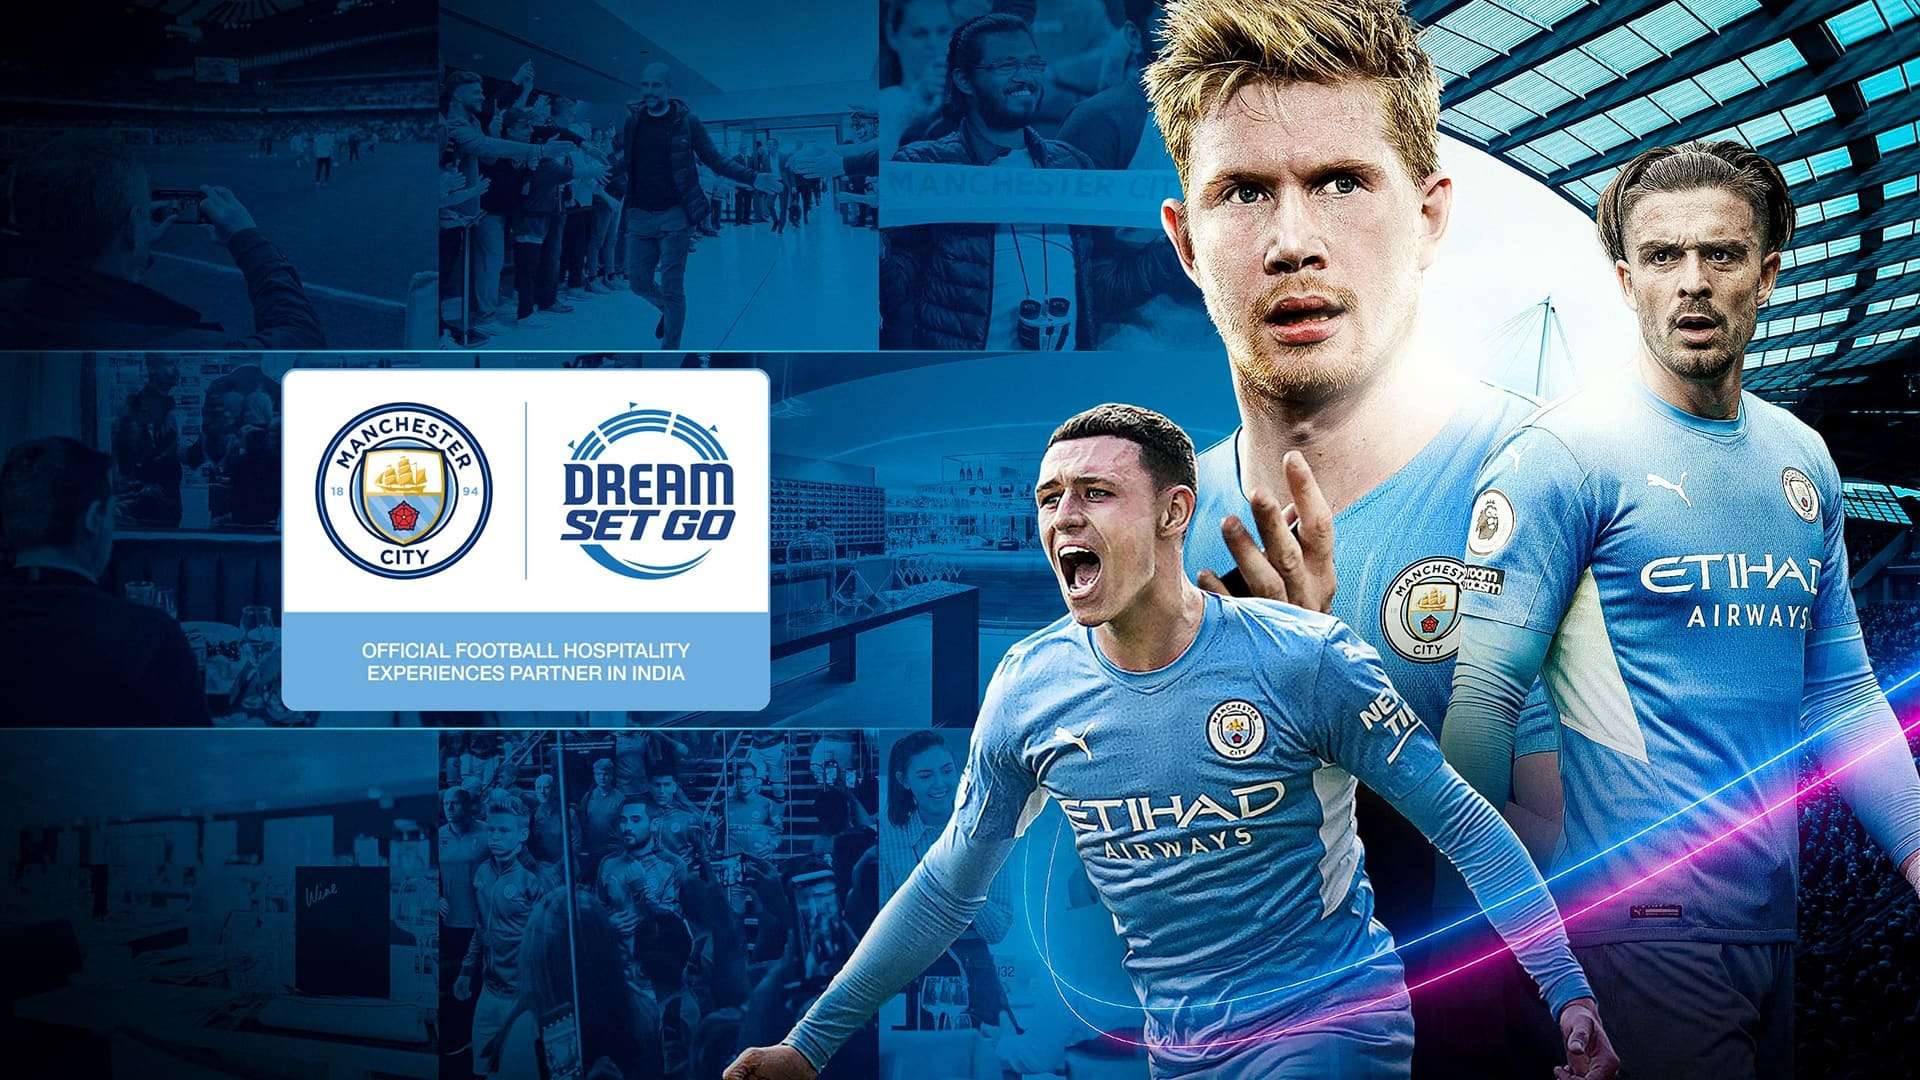 GFX Manchester City DreamSetGo partnership